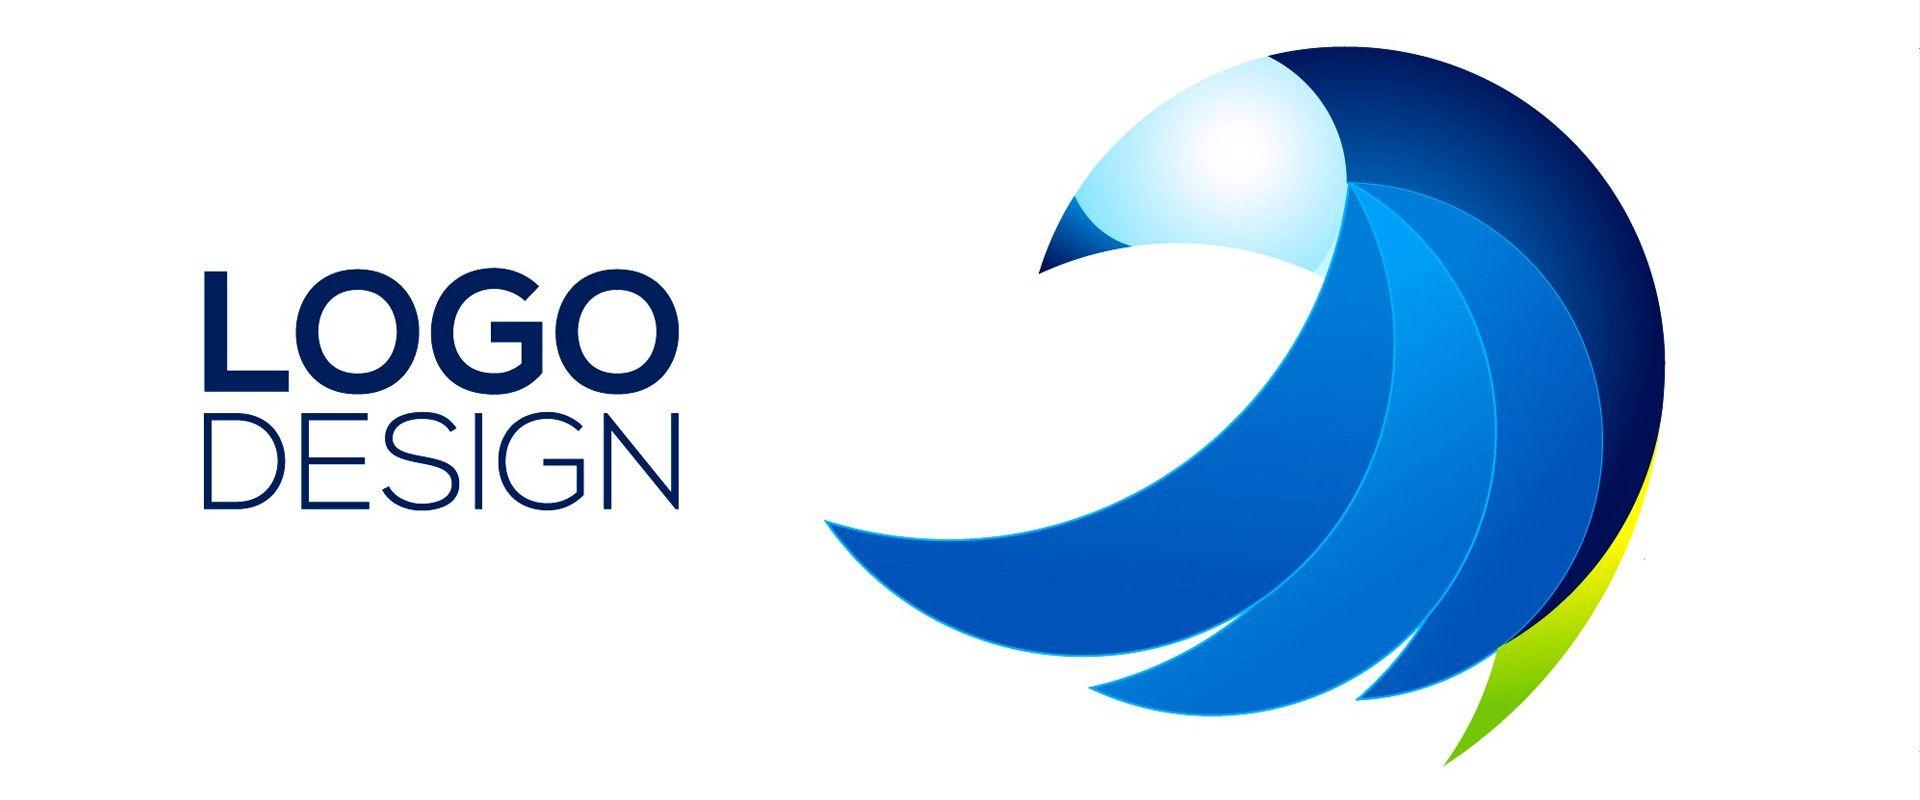 Web Company Logo - Web design Logos